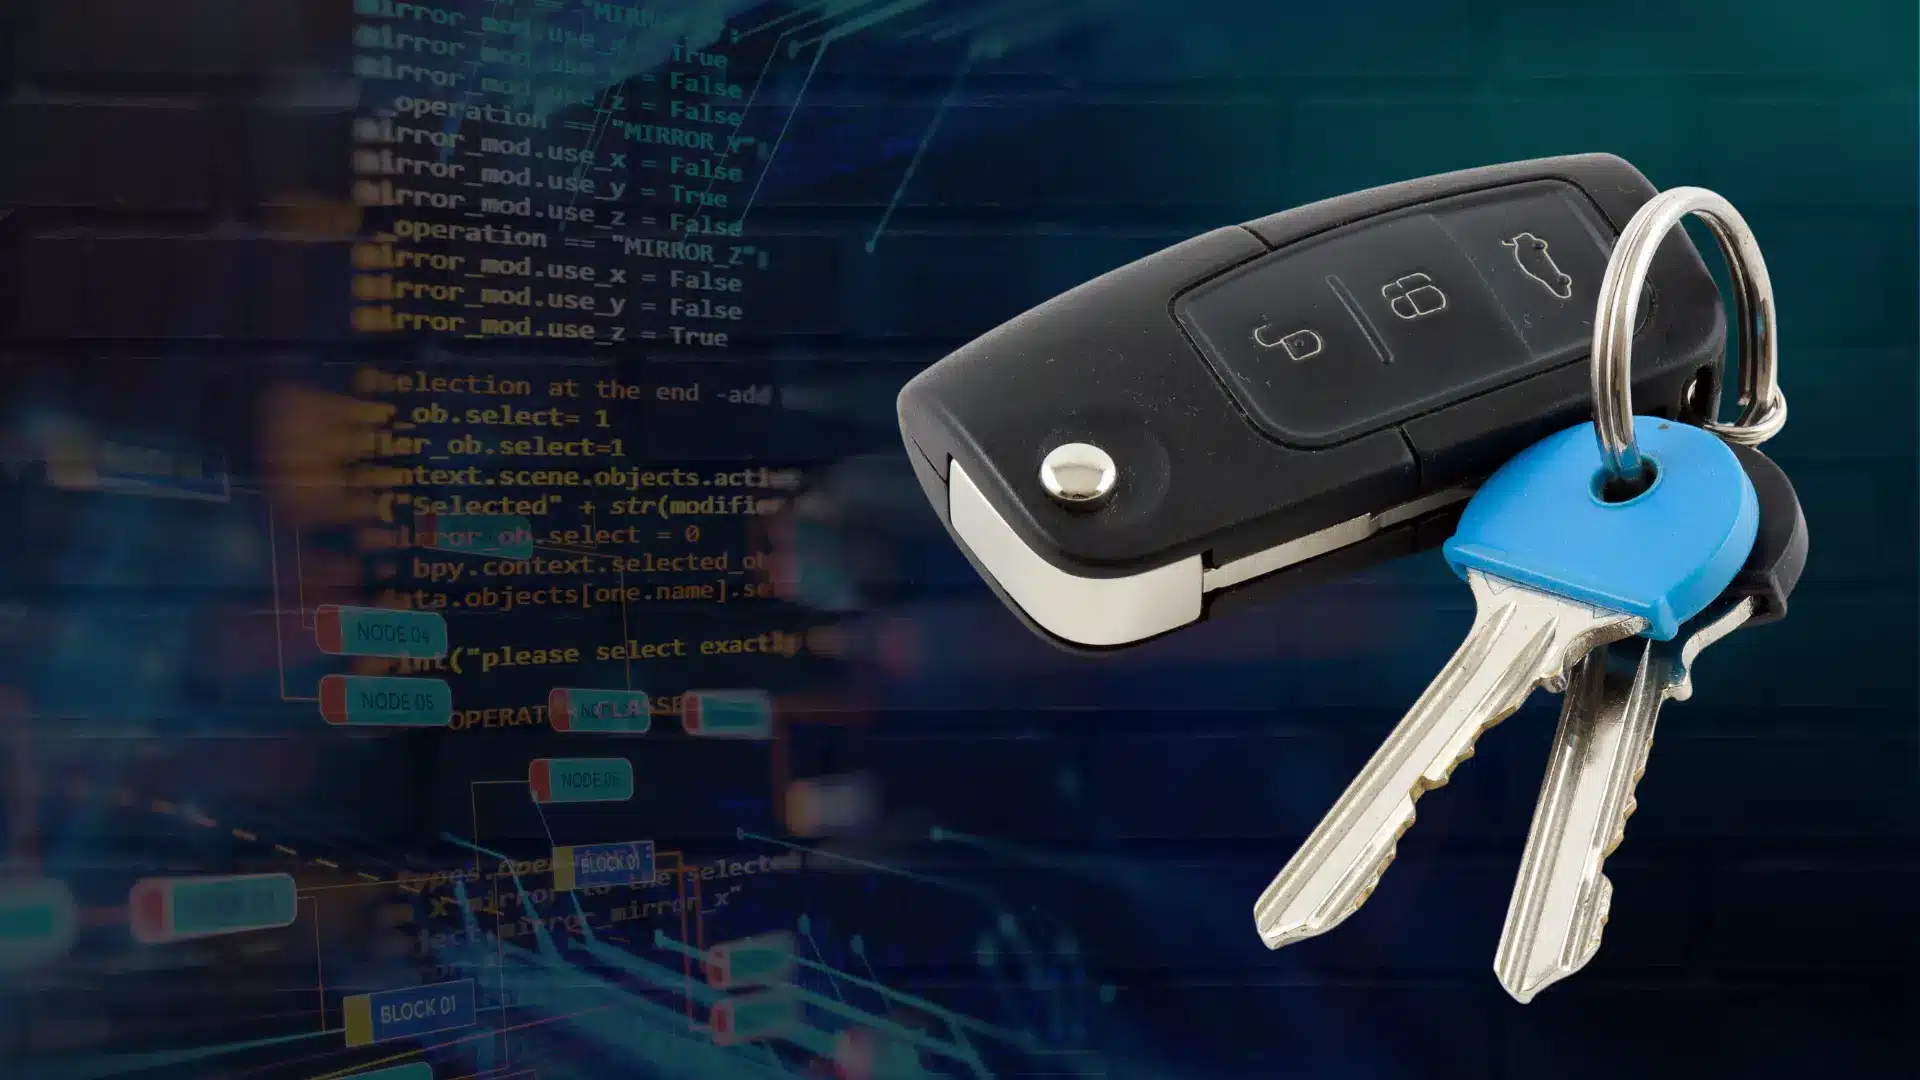 Can a locksmith reprogram a car key